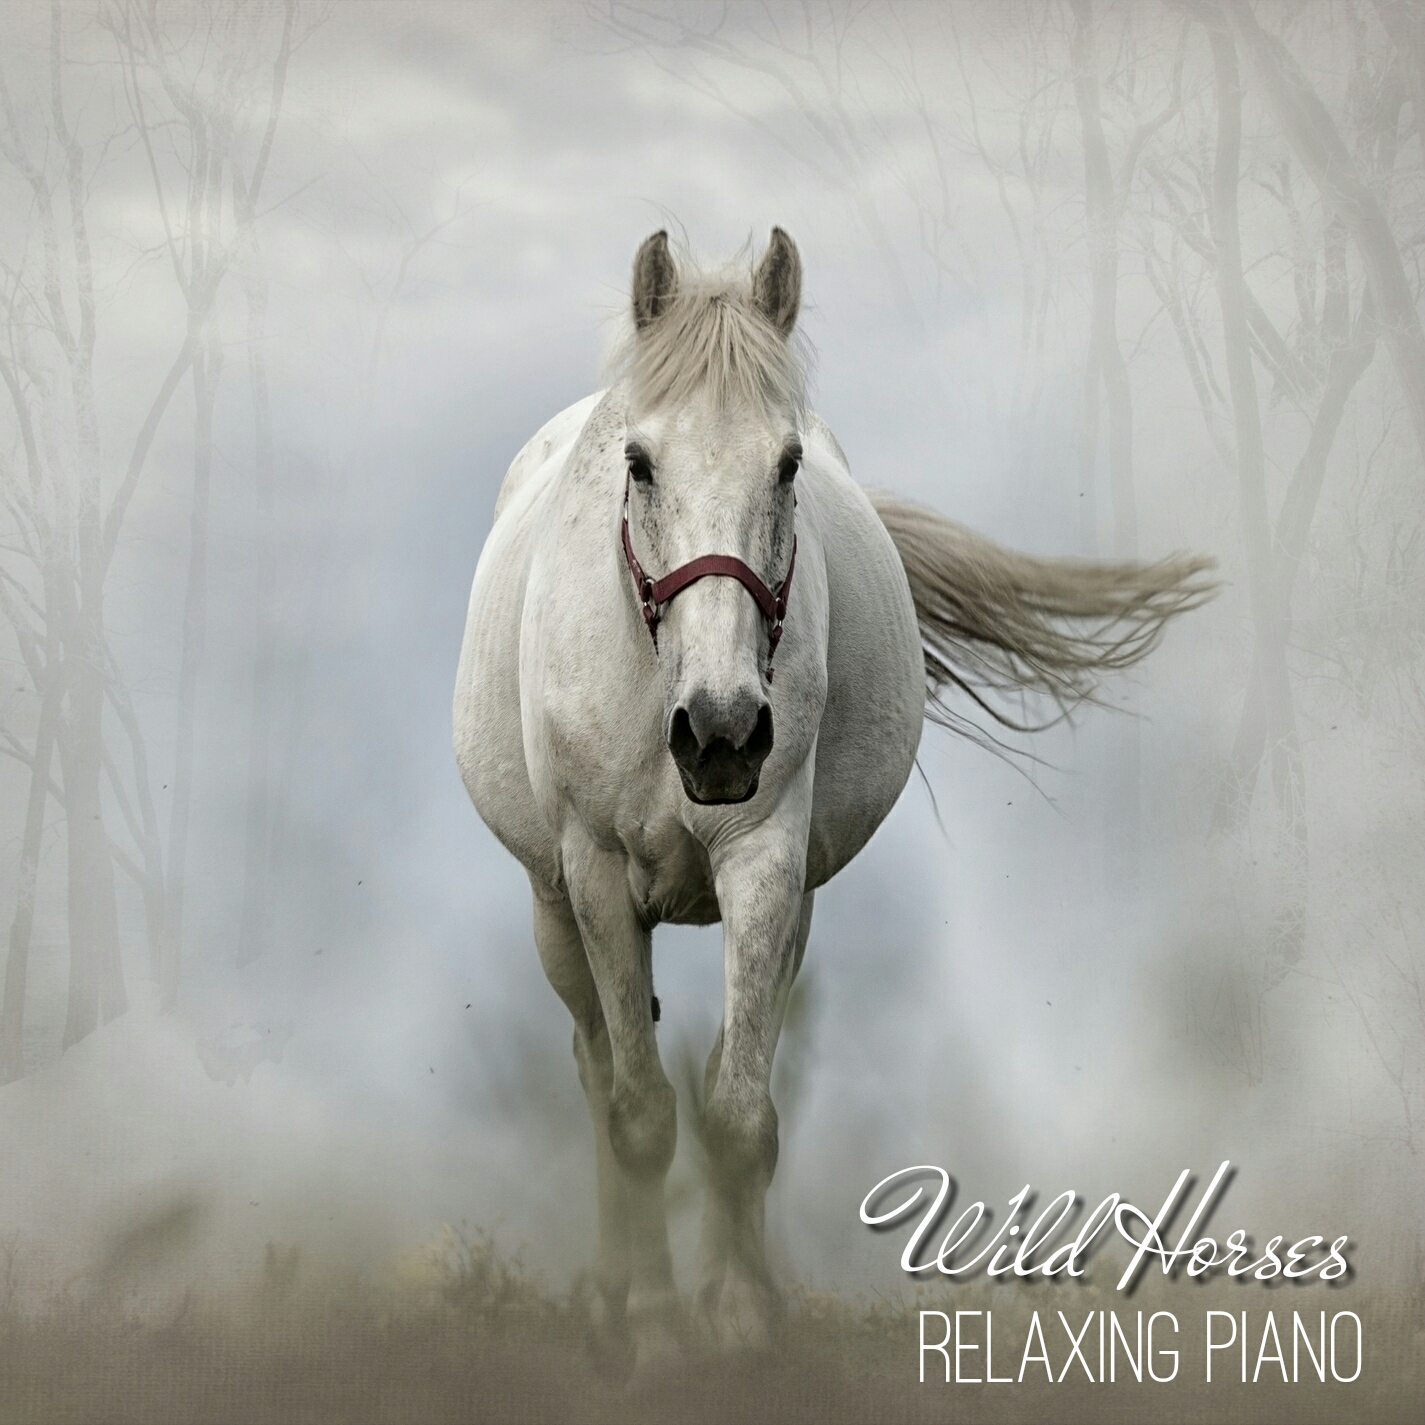 Diez años munición Regularmente Wild Horses Relaxing Piano Mp3 Music Download | Music2relax.com